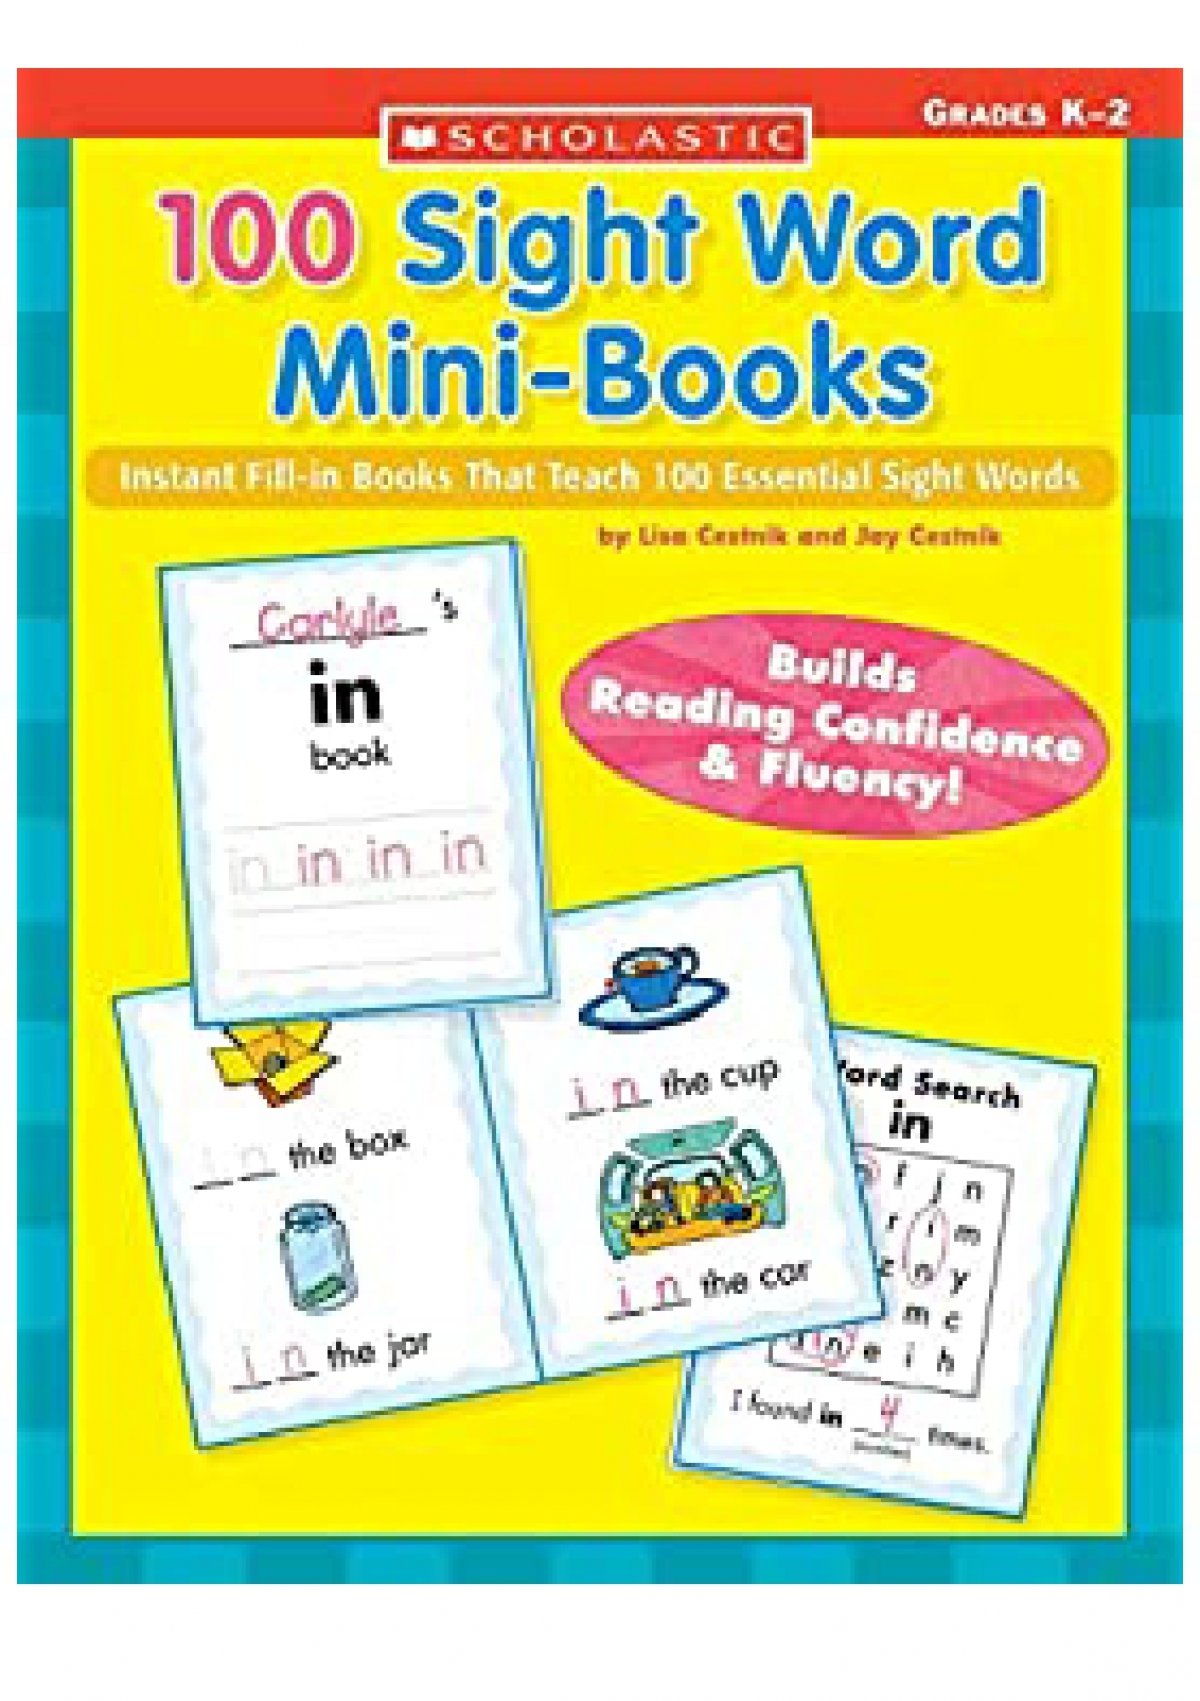 pdf-download-100-sight-word-mini-books-instant-fill-in-mini-books